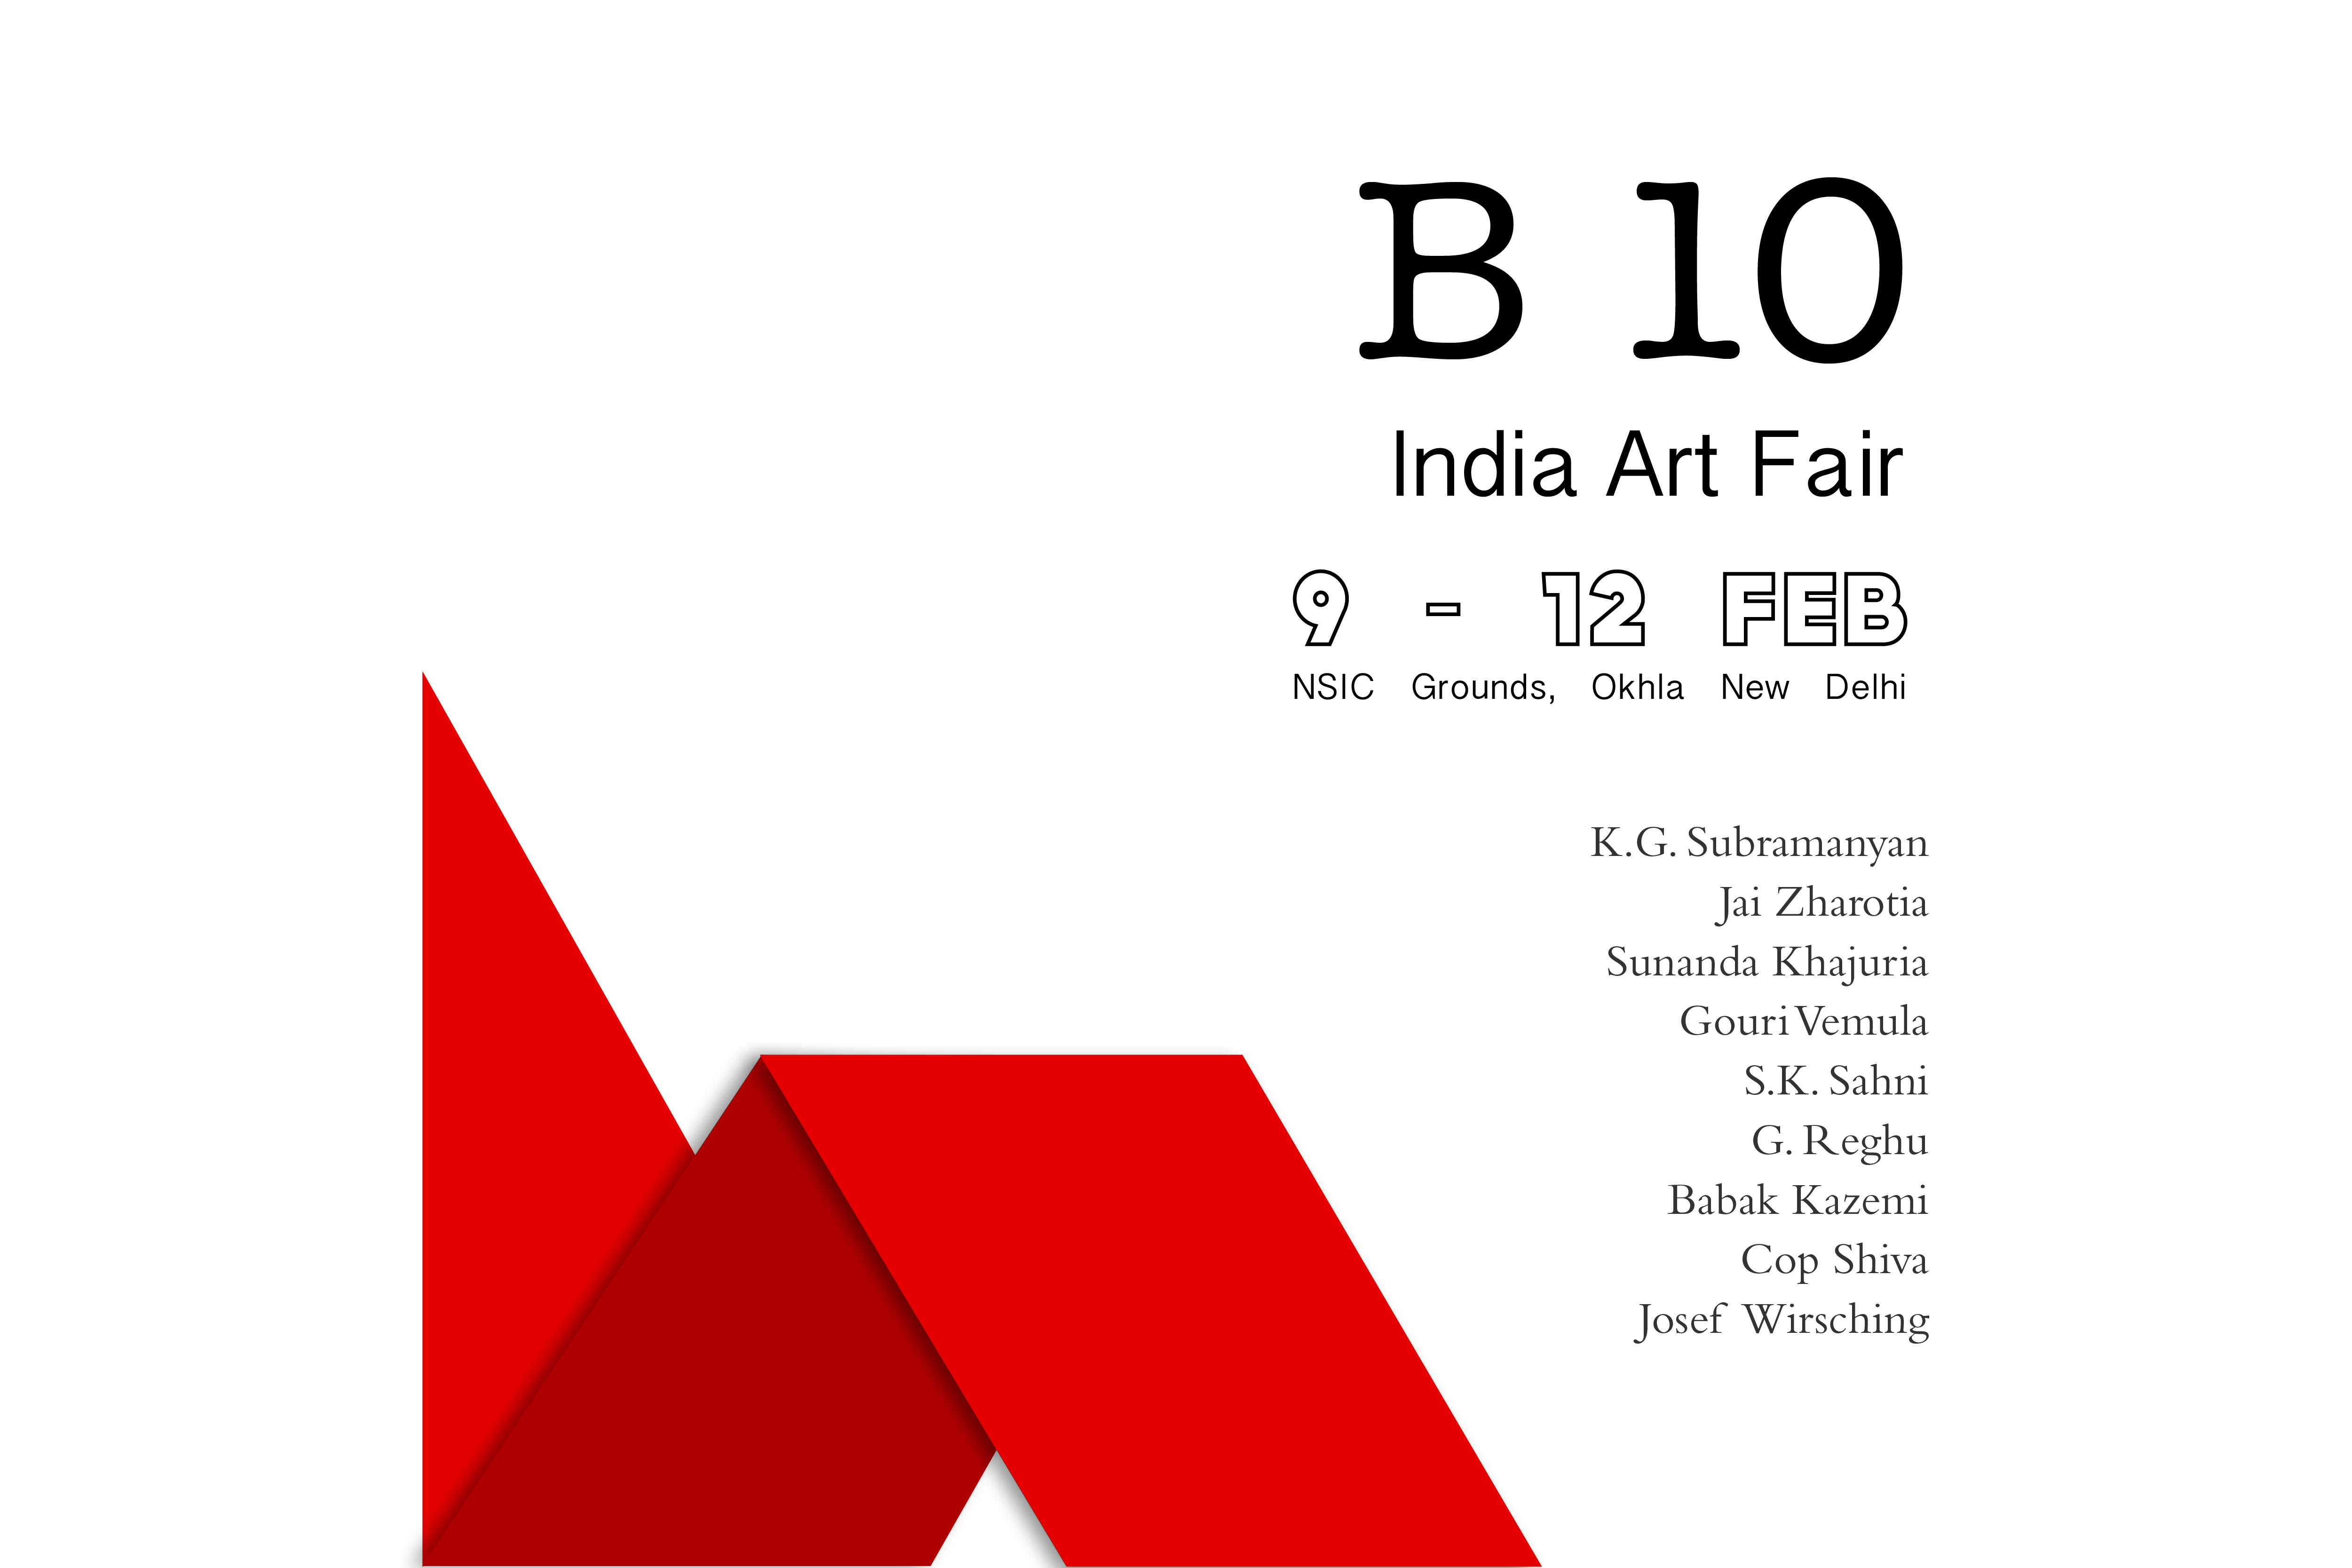 India Art Fair 2018